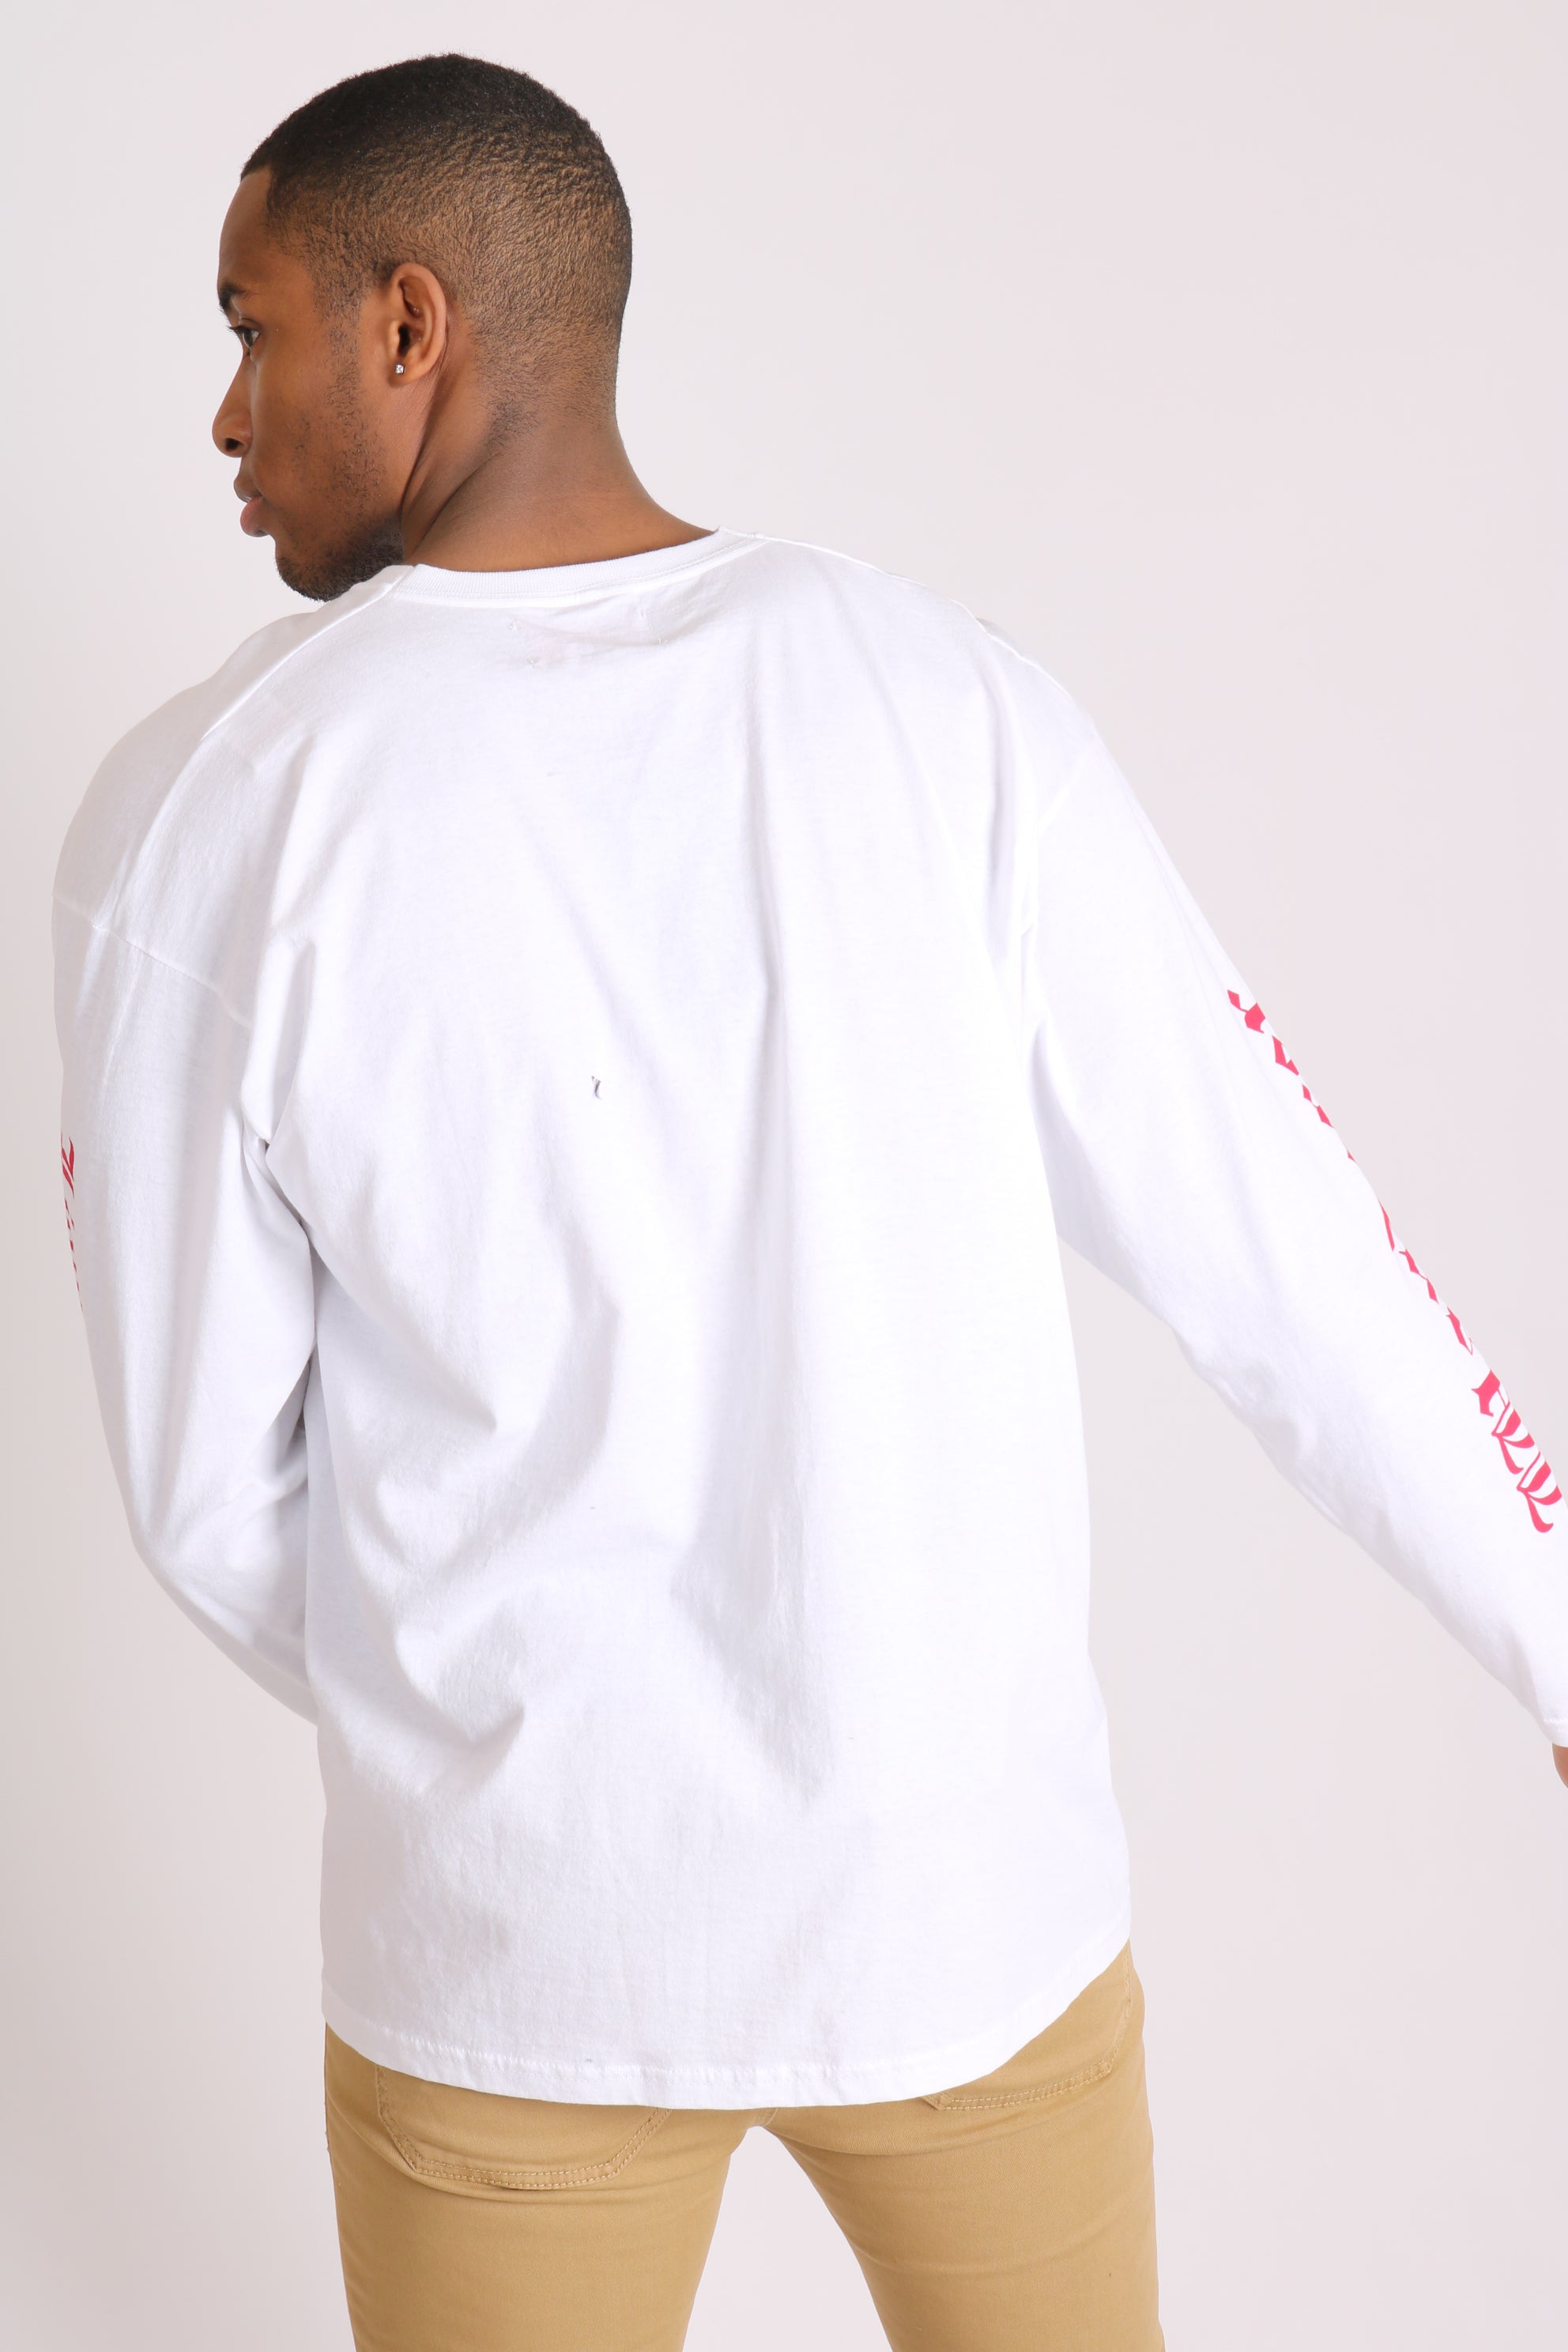 Safari Printed White Long Sleeve Top